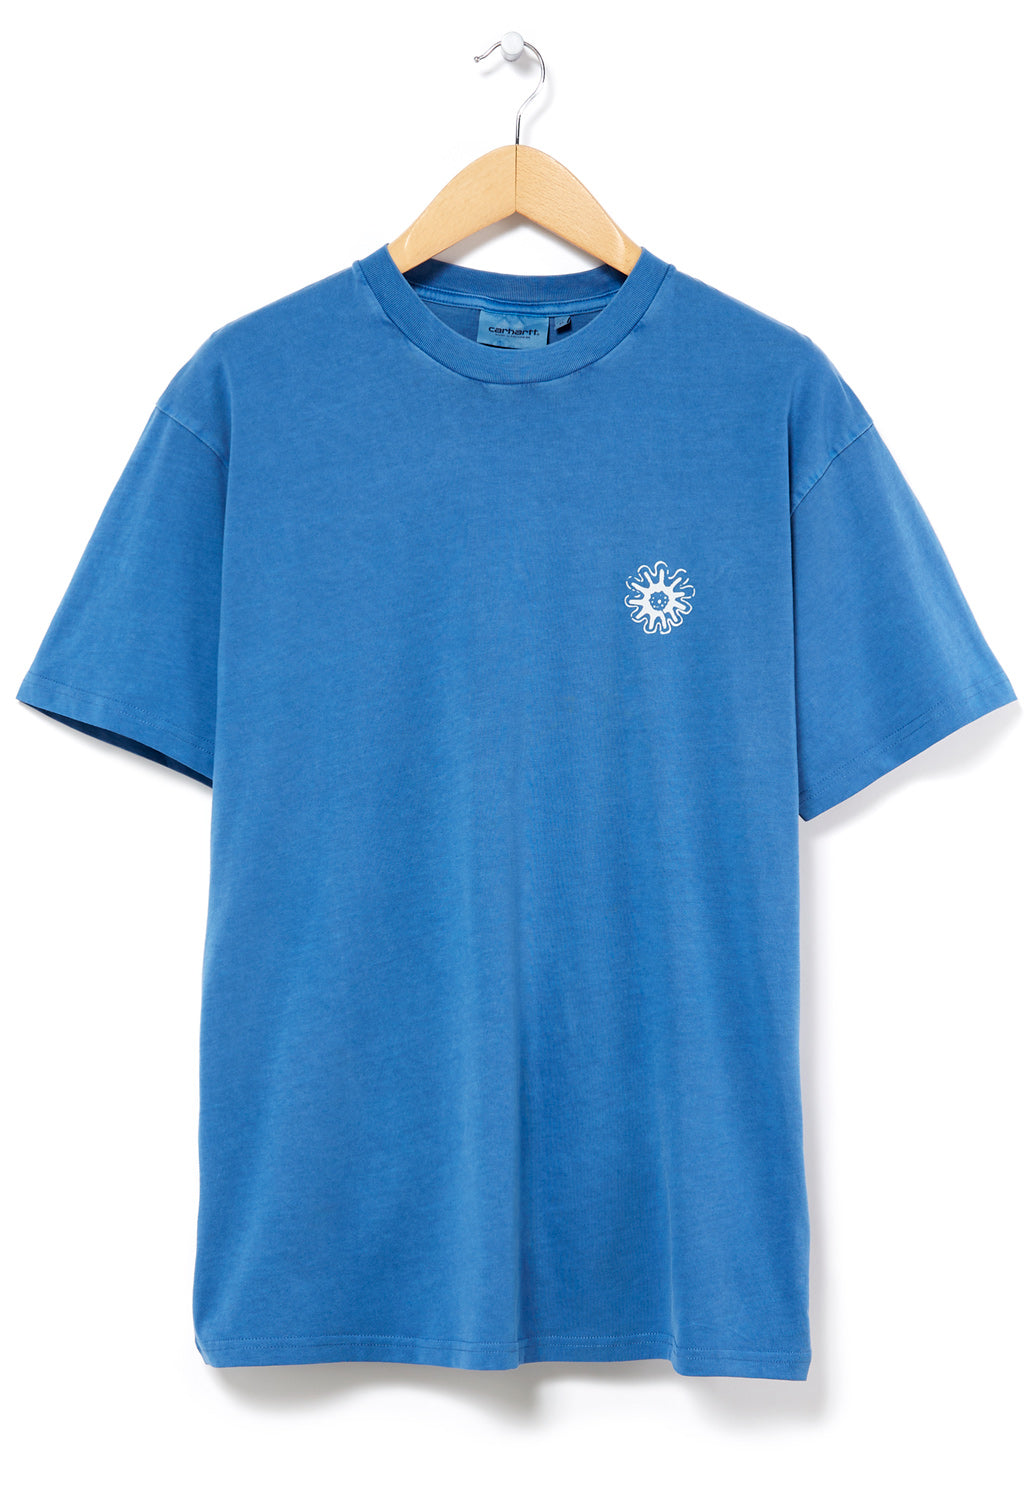 Carhartt WIP Men's Splash T-Shirt - Liberty